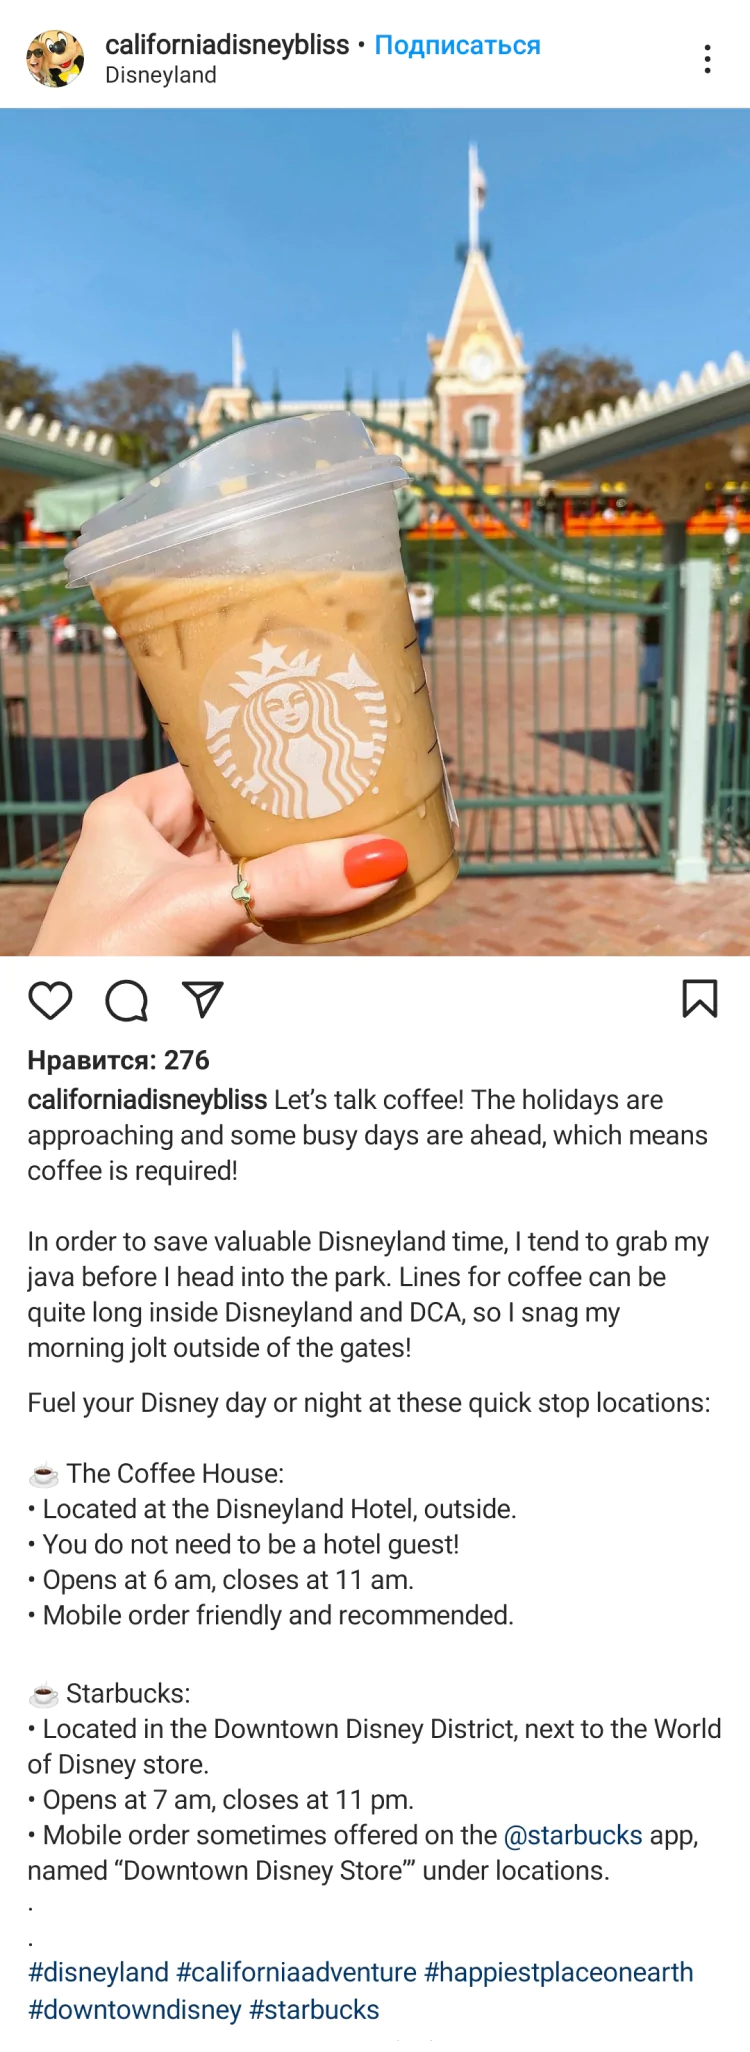 Клиенты Starbucks часто постят фото напитка с хештегом